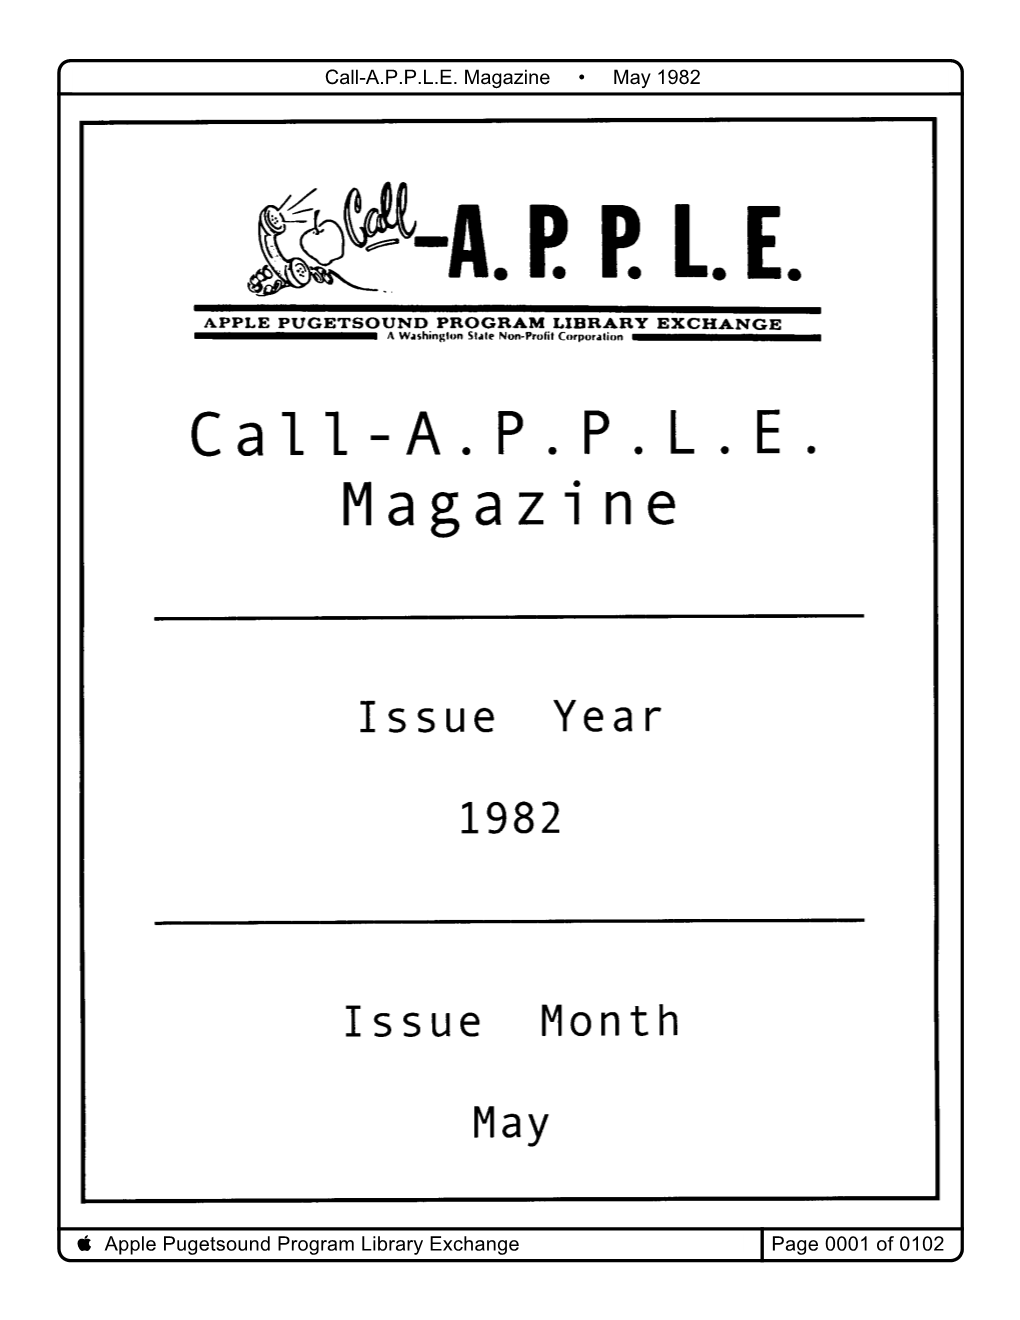 Call-A.P.P.L.E. Magazine 1982-5